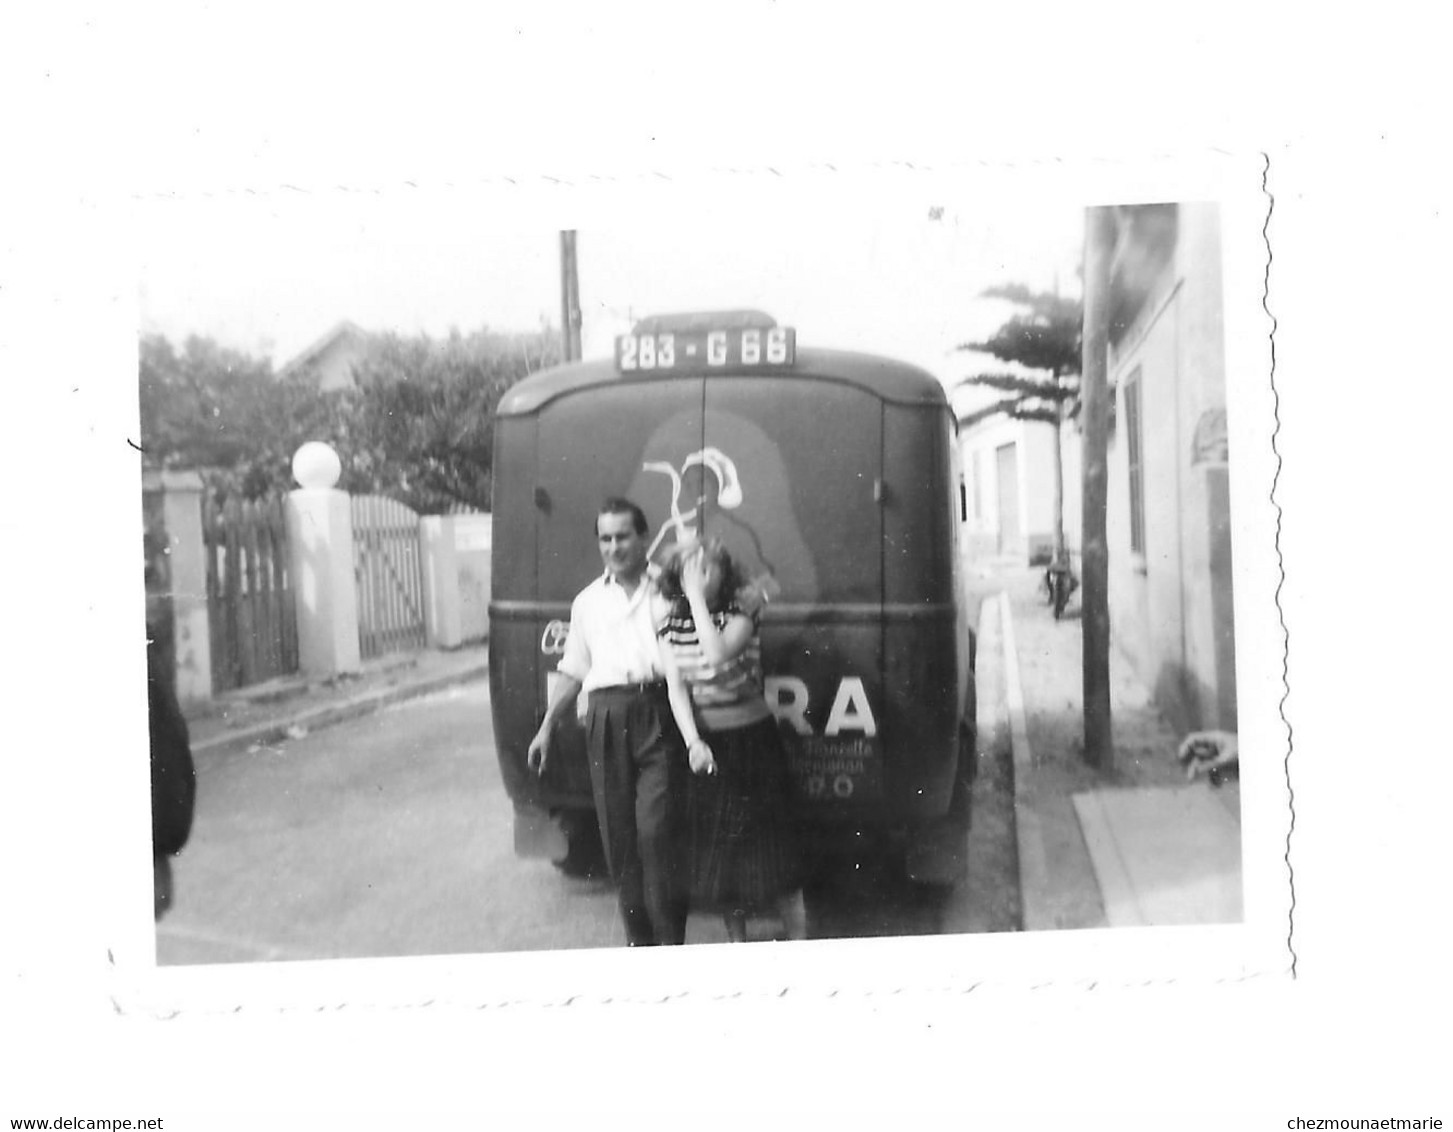 CANET EN JUIN 1951 CAMION AVEC PUBLICITE IMMATRICULATION 283 G 66 - PHOTO PYRENEES ORIENTALES - Coches